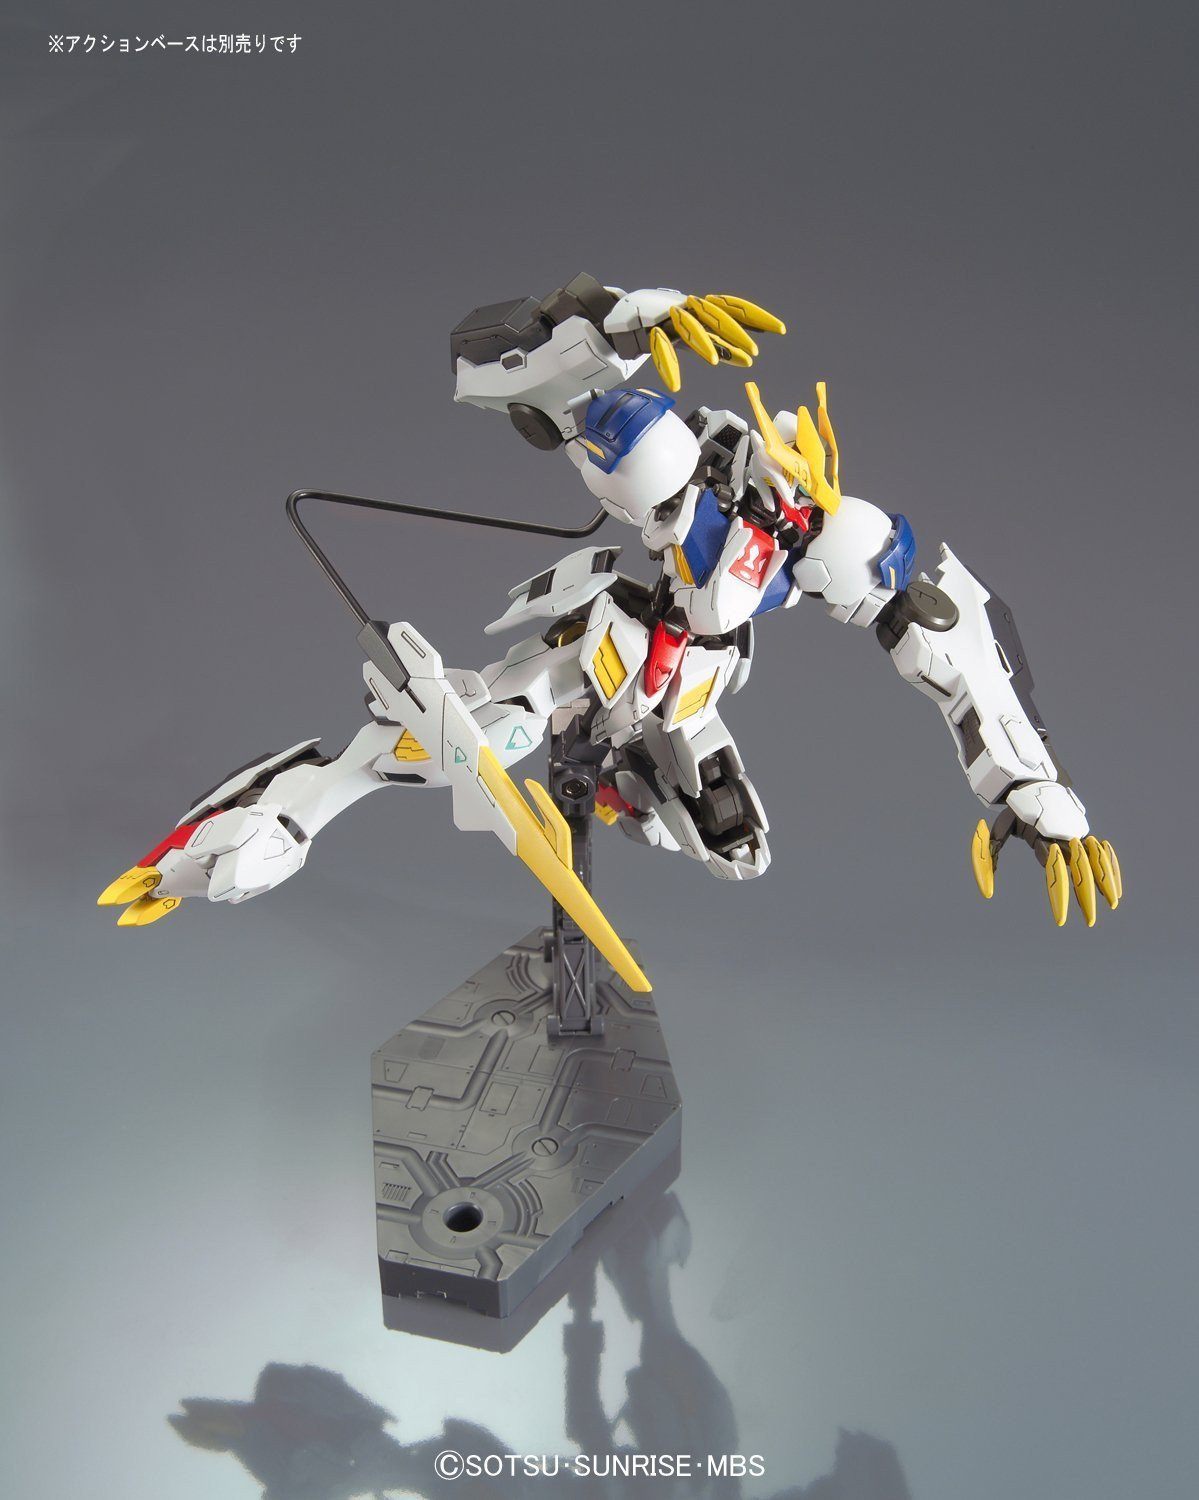 HGIBO - ASW-G-08 Gundam Barbatos Lupus Rex